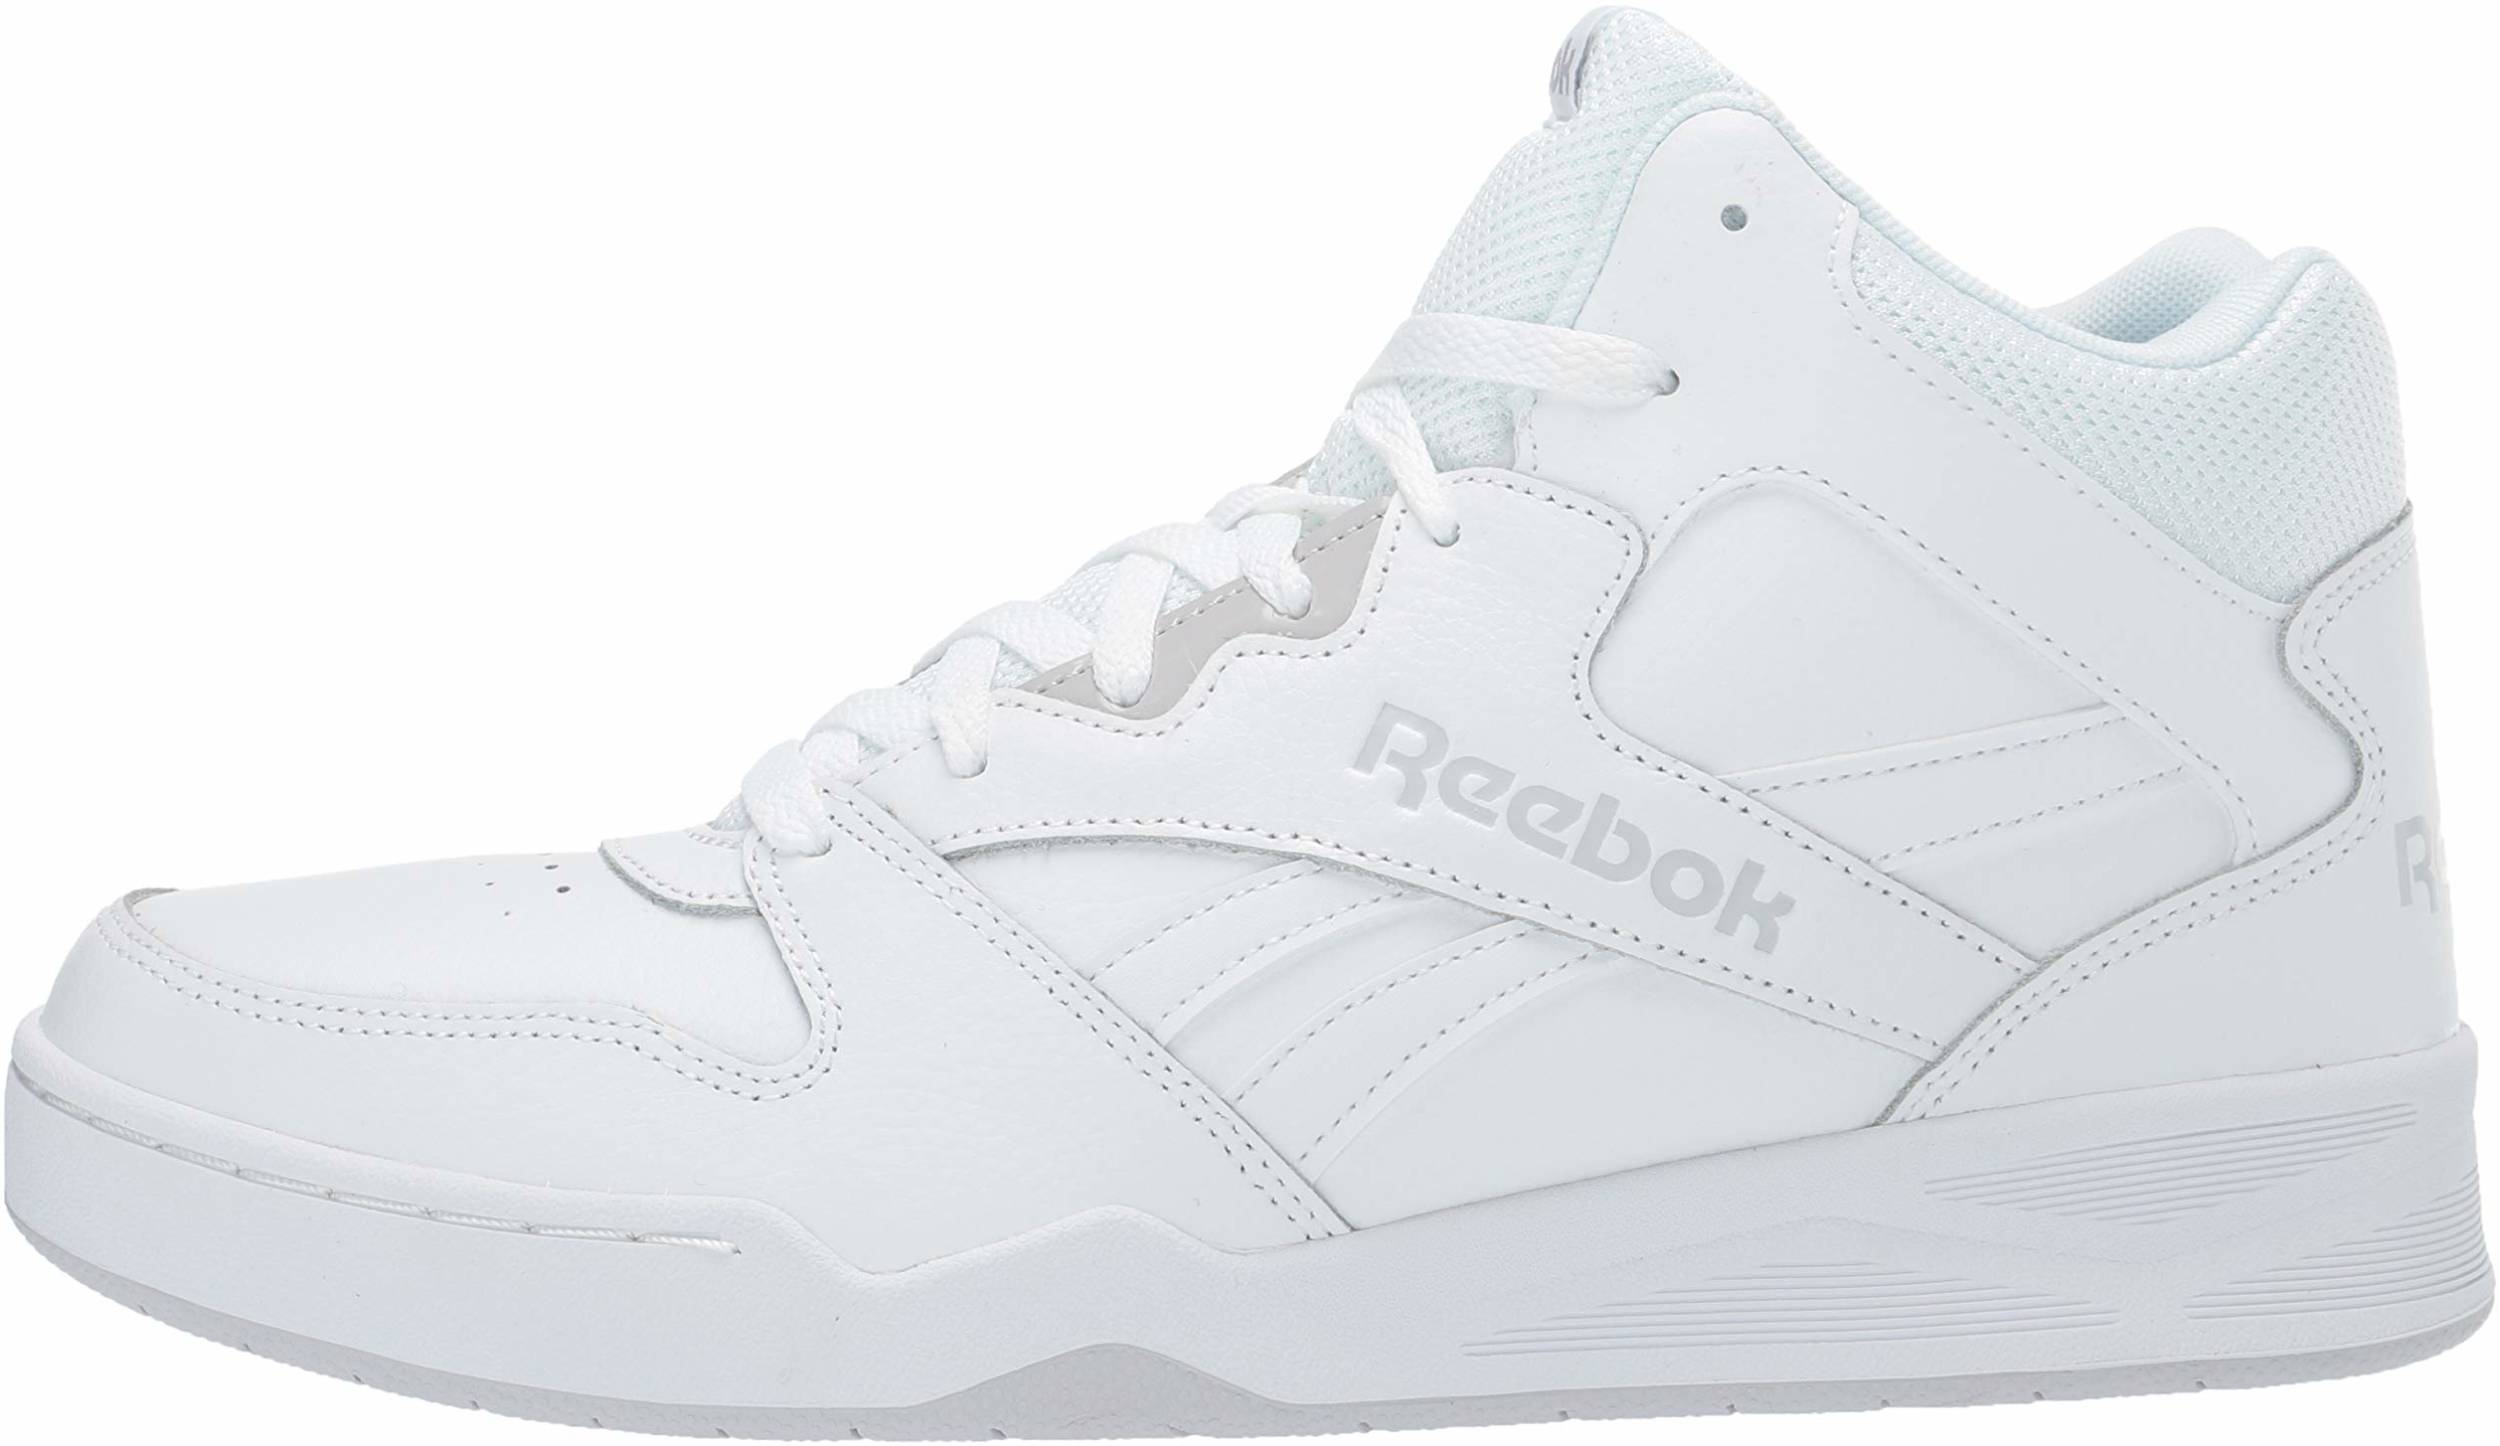 Save 35% on White Reebok Sneakers (63 